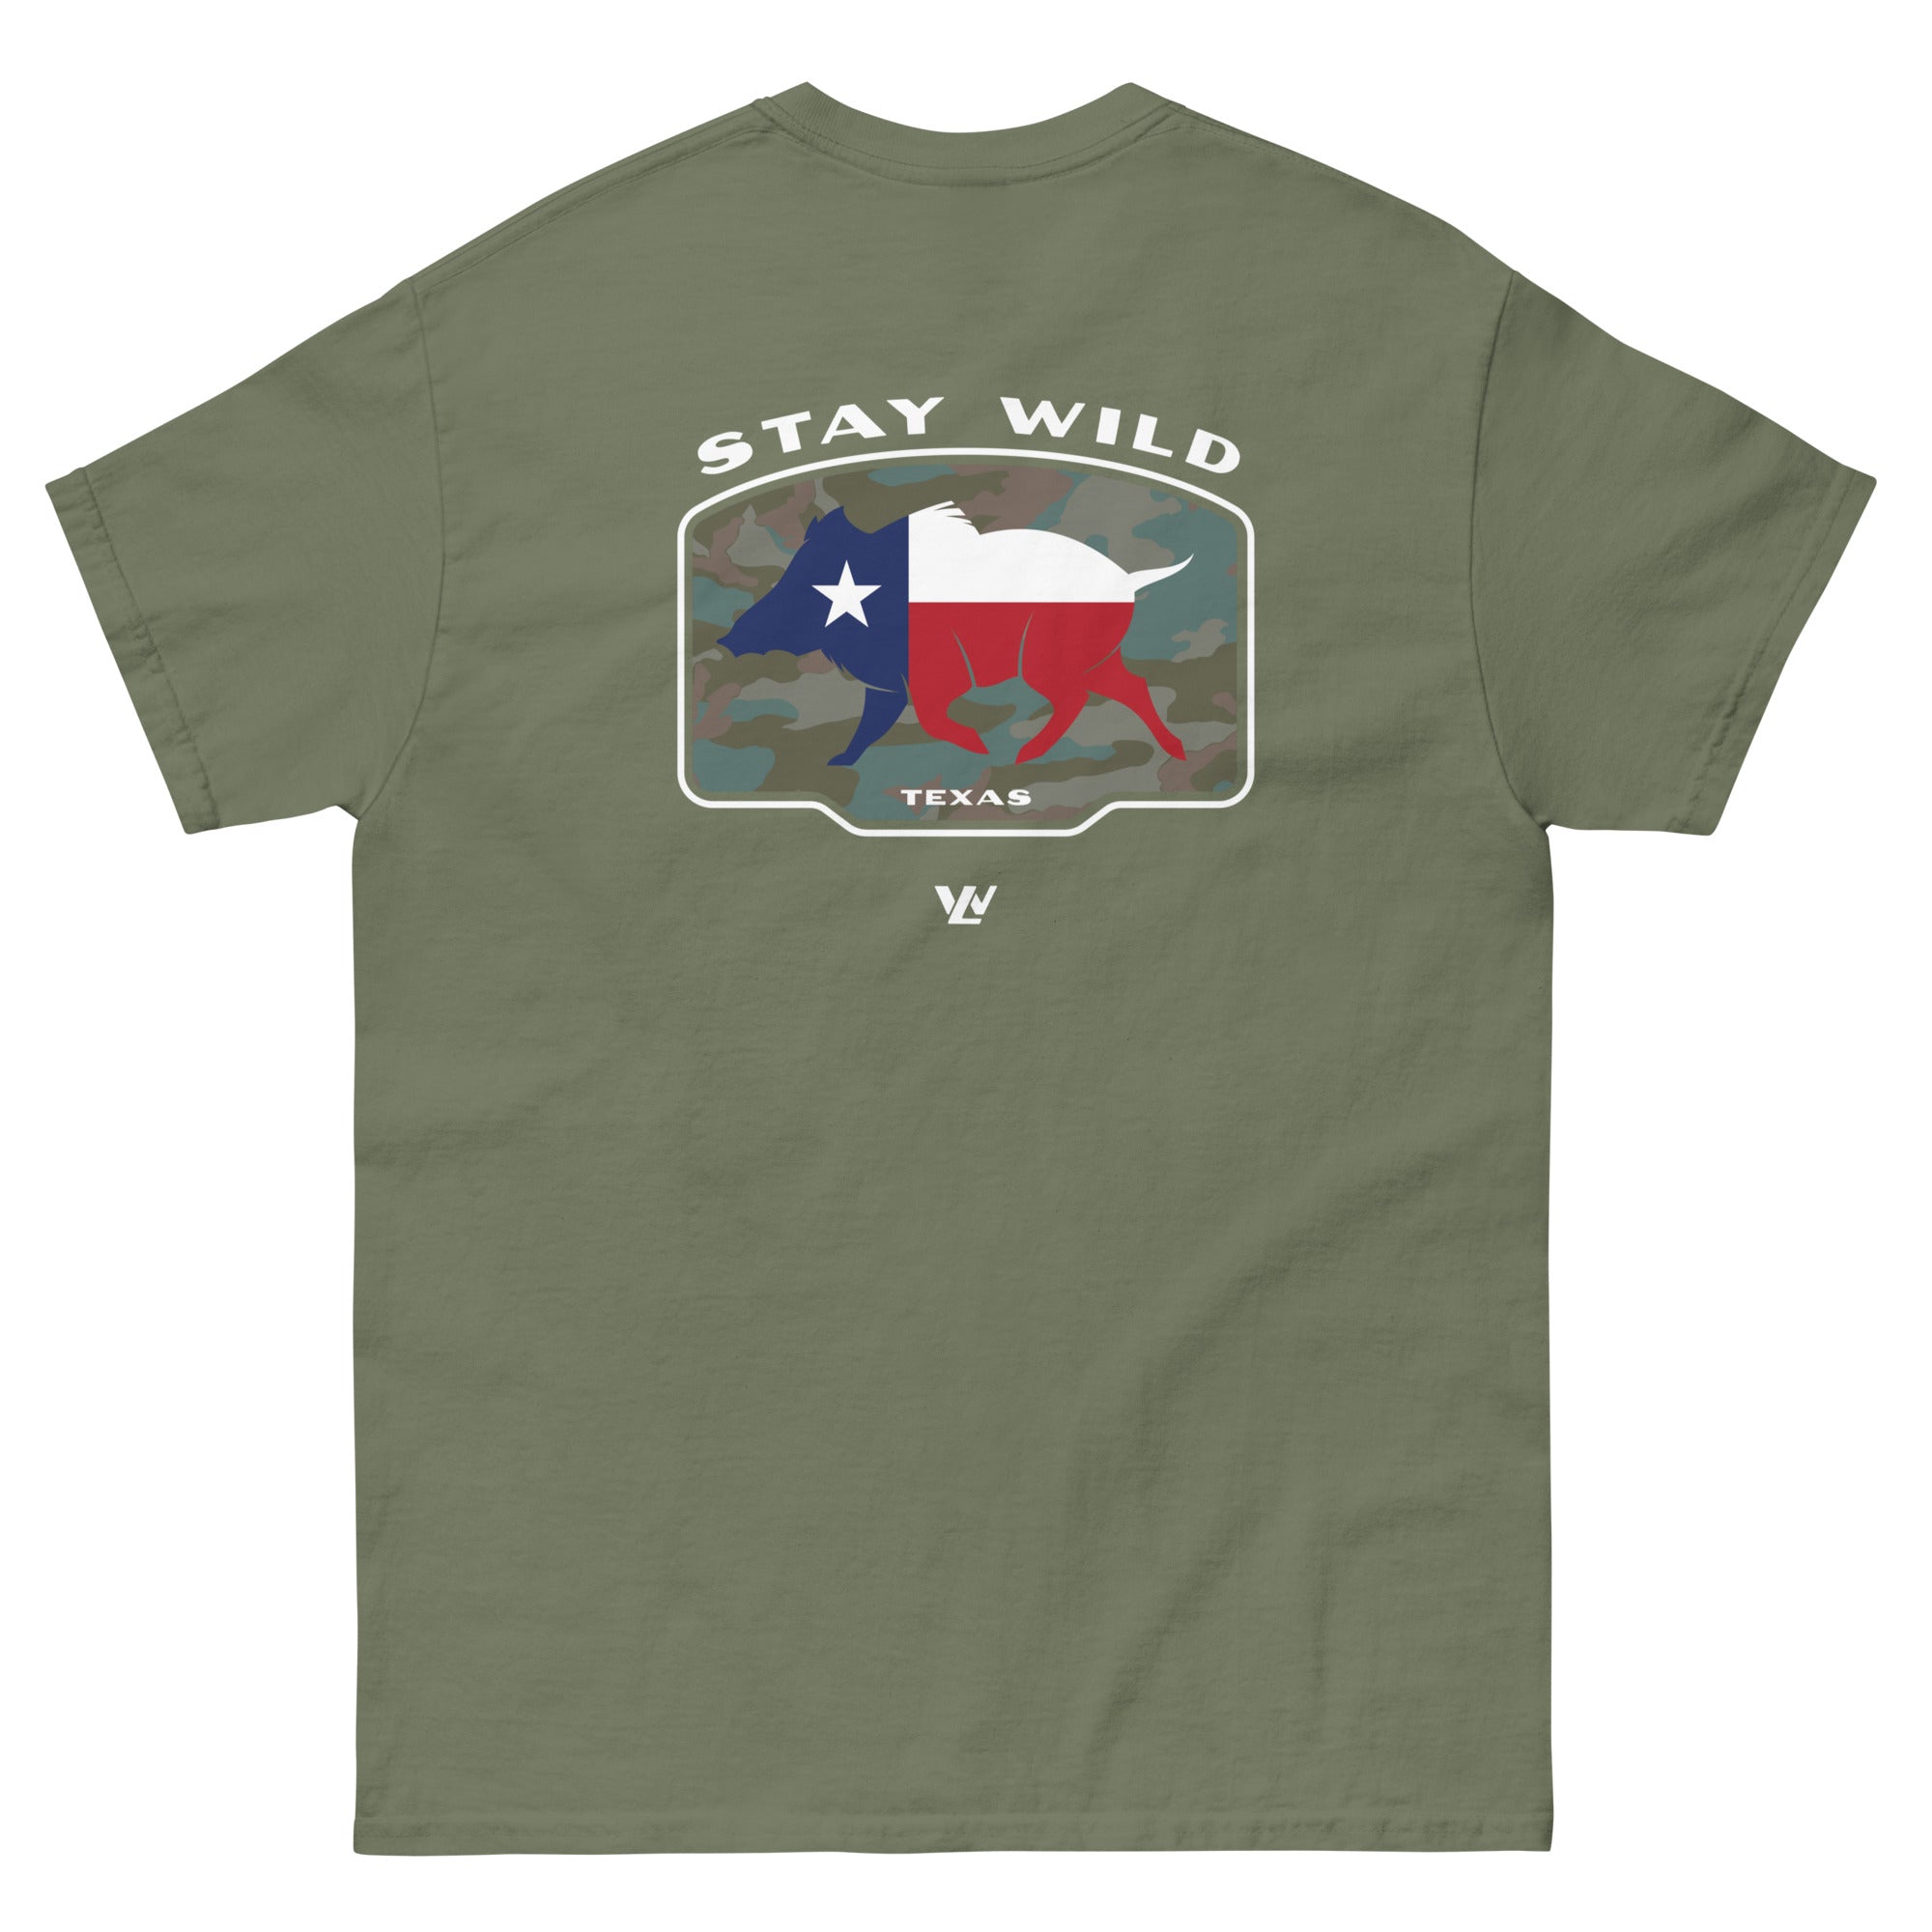 Stay Wild Texas T-Shirt - Wilding Life